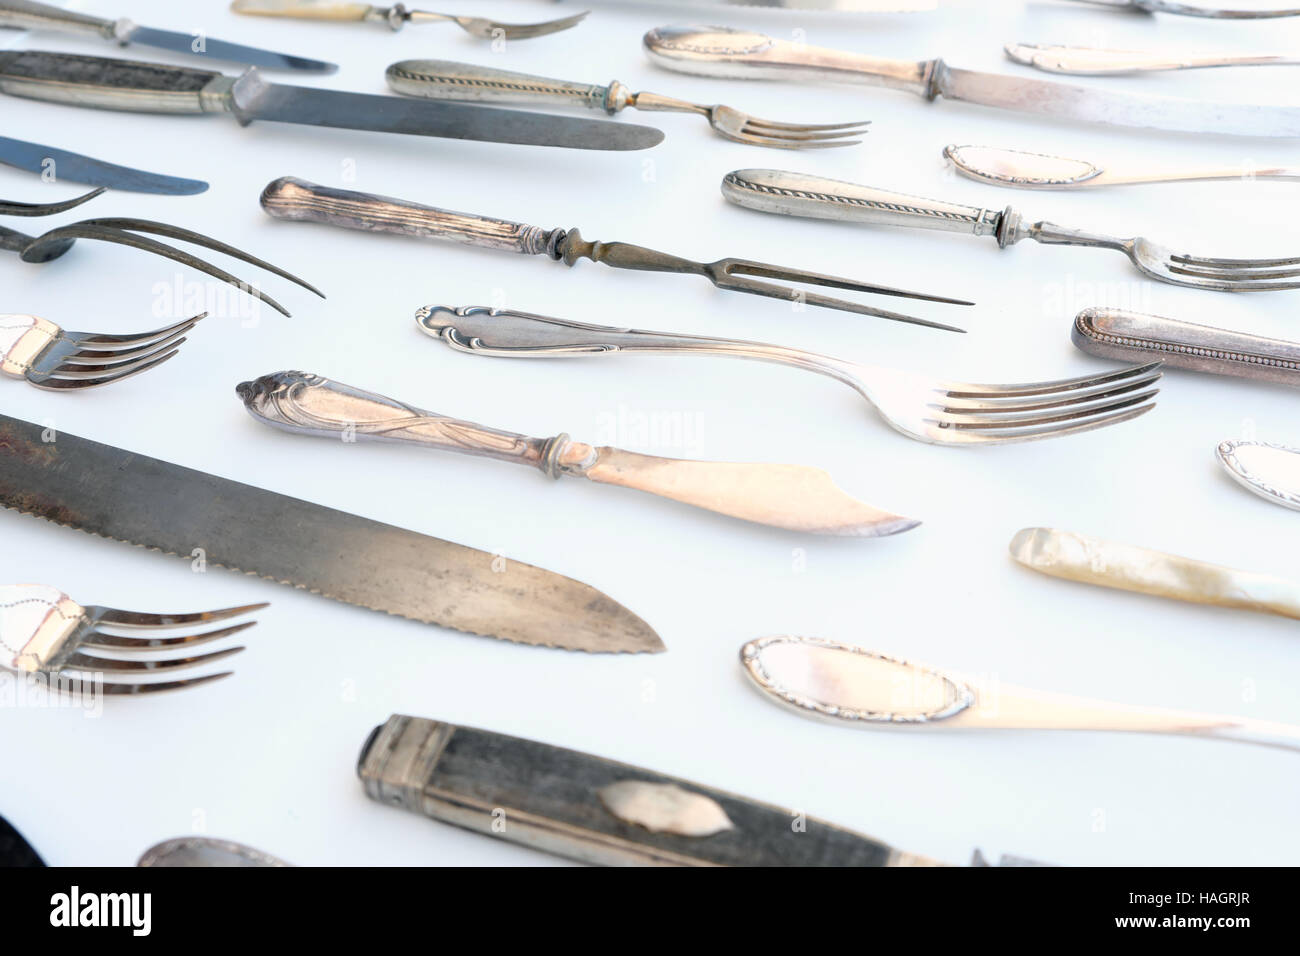 Coltello e forchetta pattern - annata splendida posate, posate in argento Foto Stock